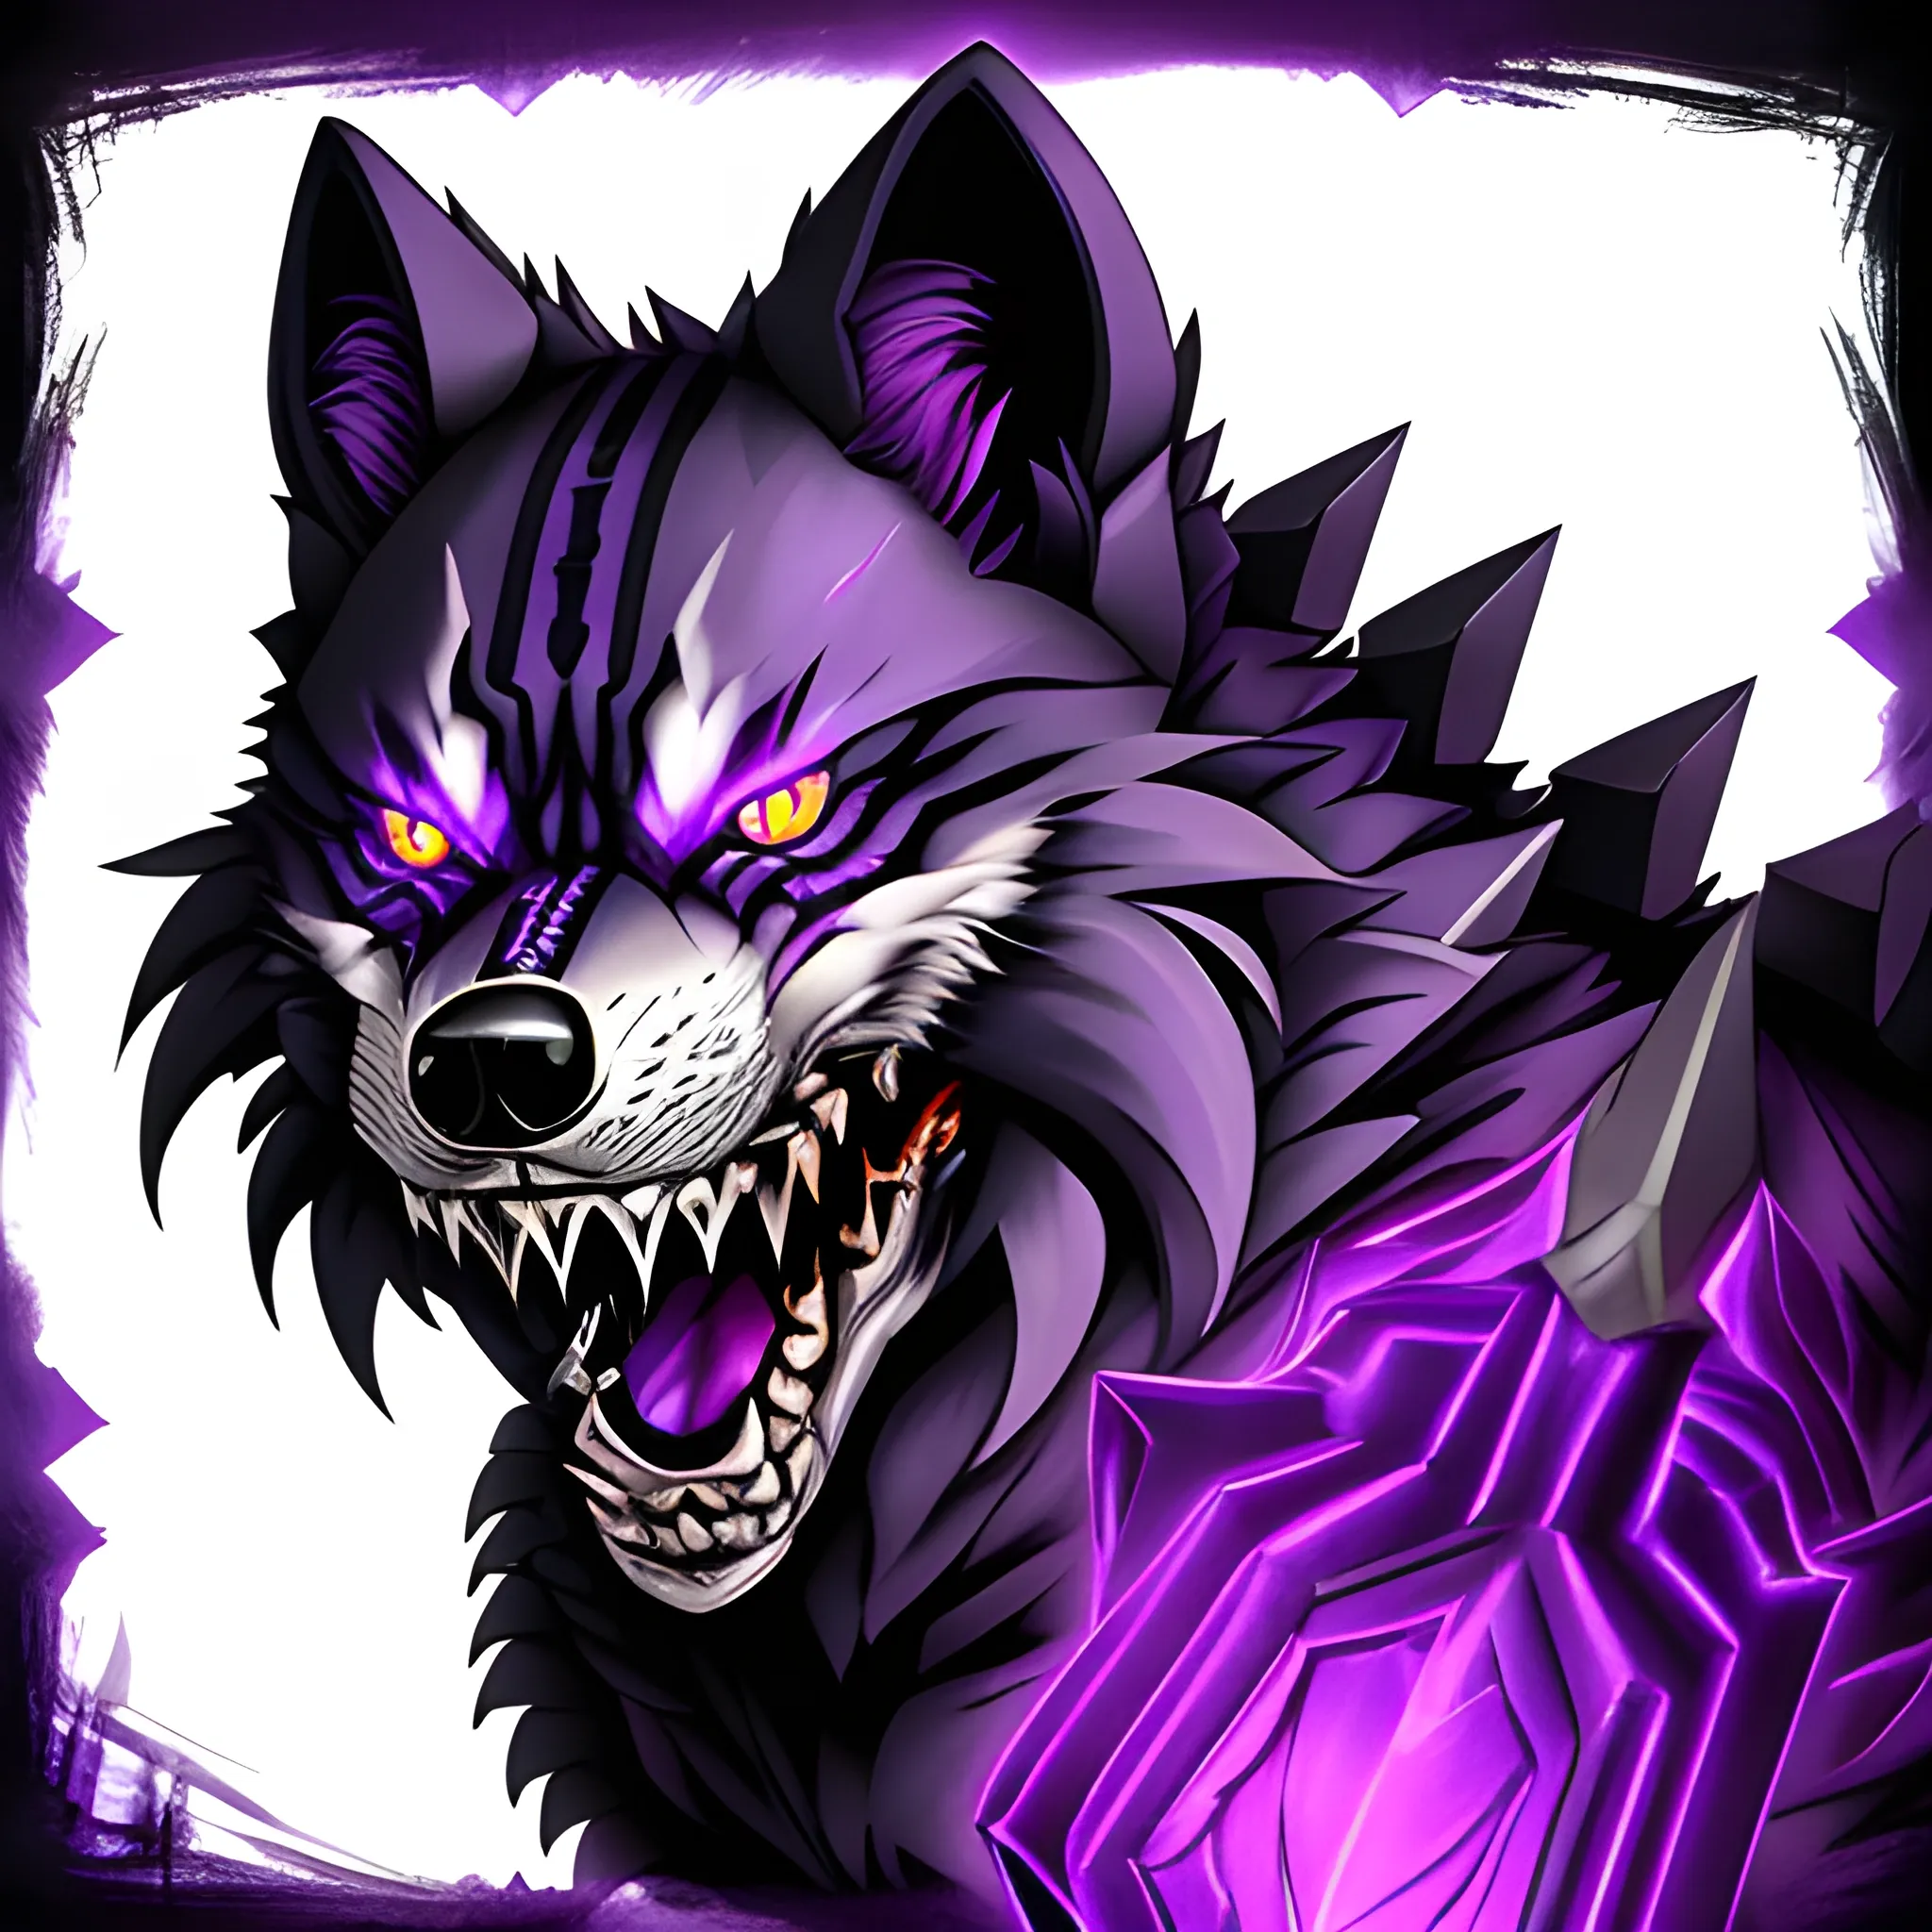 Death wolf, Armored, Sharp teeth, purple glowing eyes